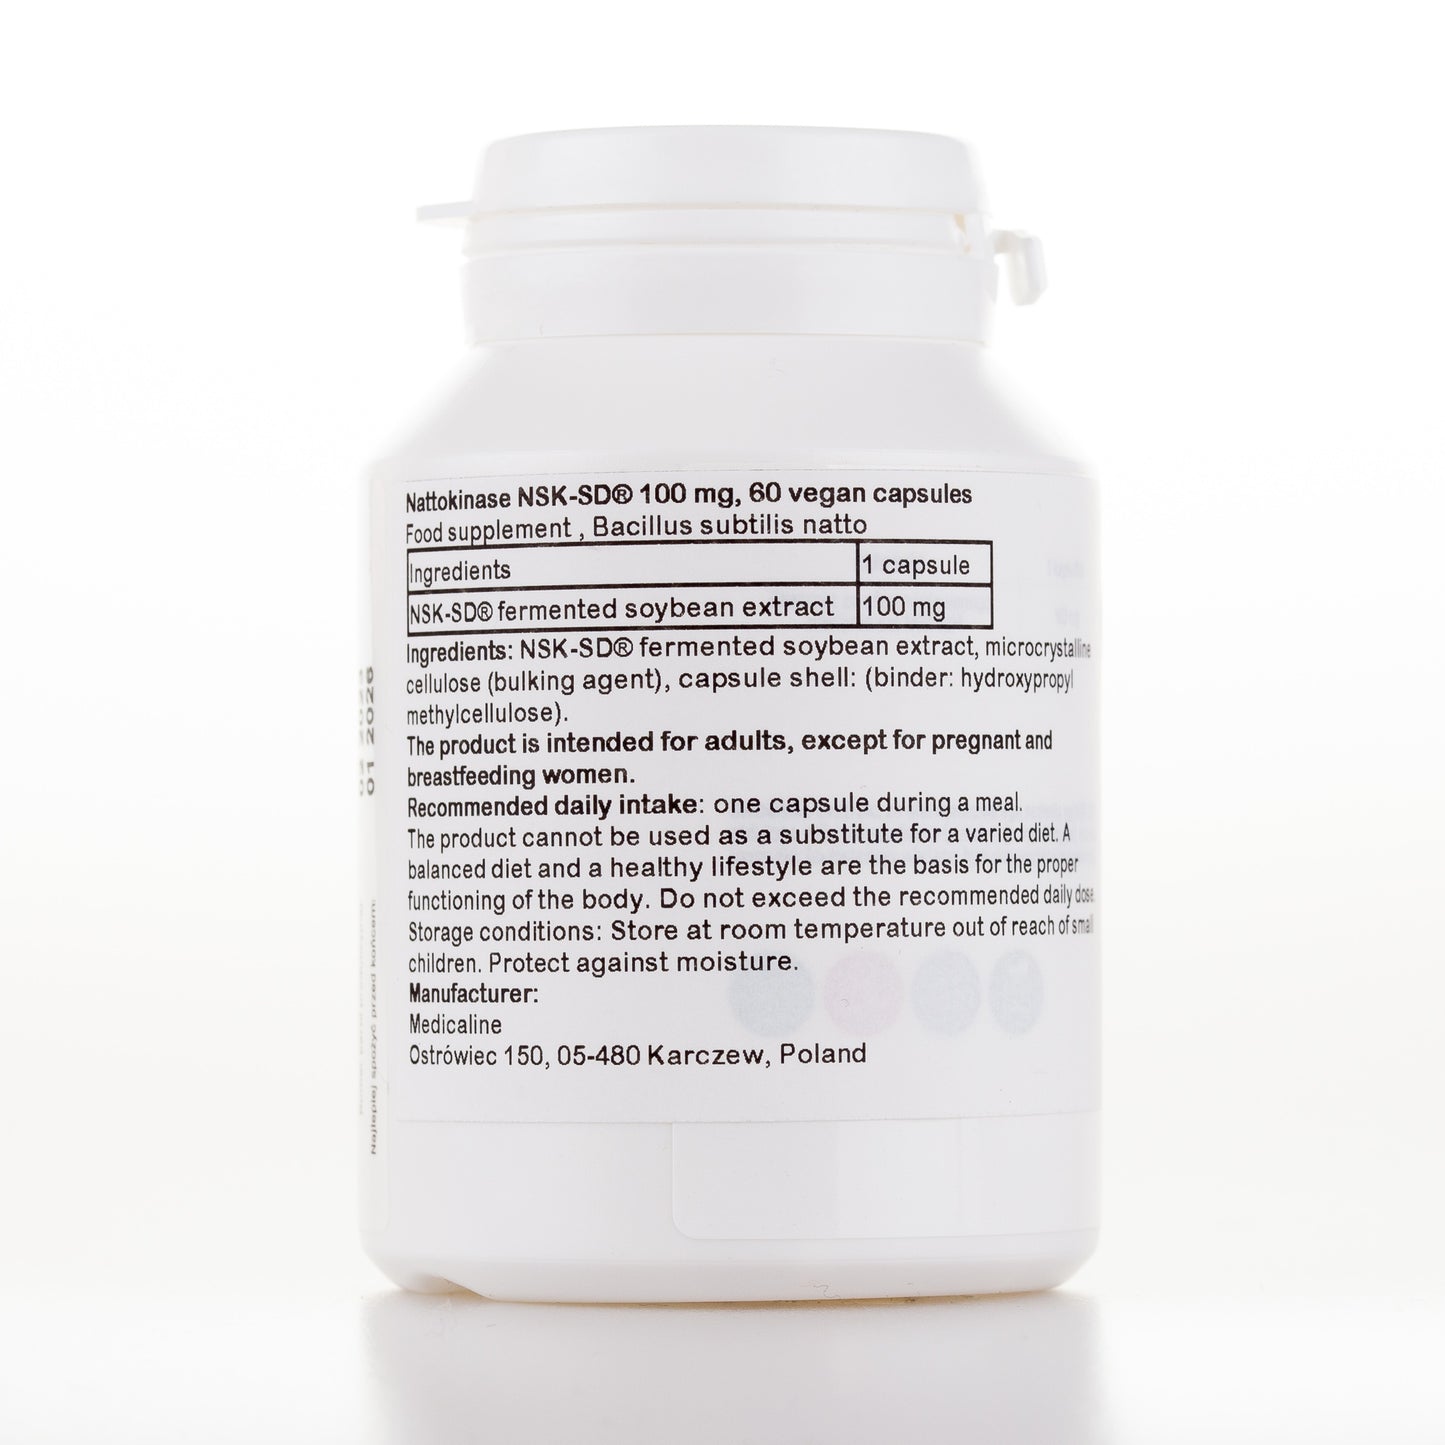 Nattokinase NSK-SD® 100 mg, 60 vegan capsules